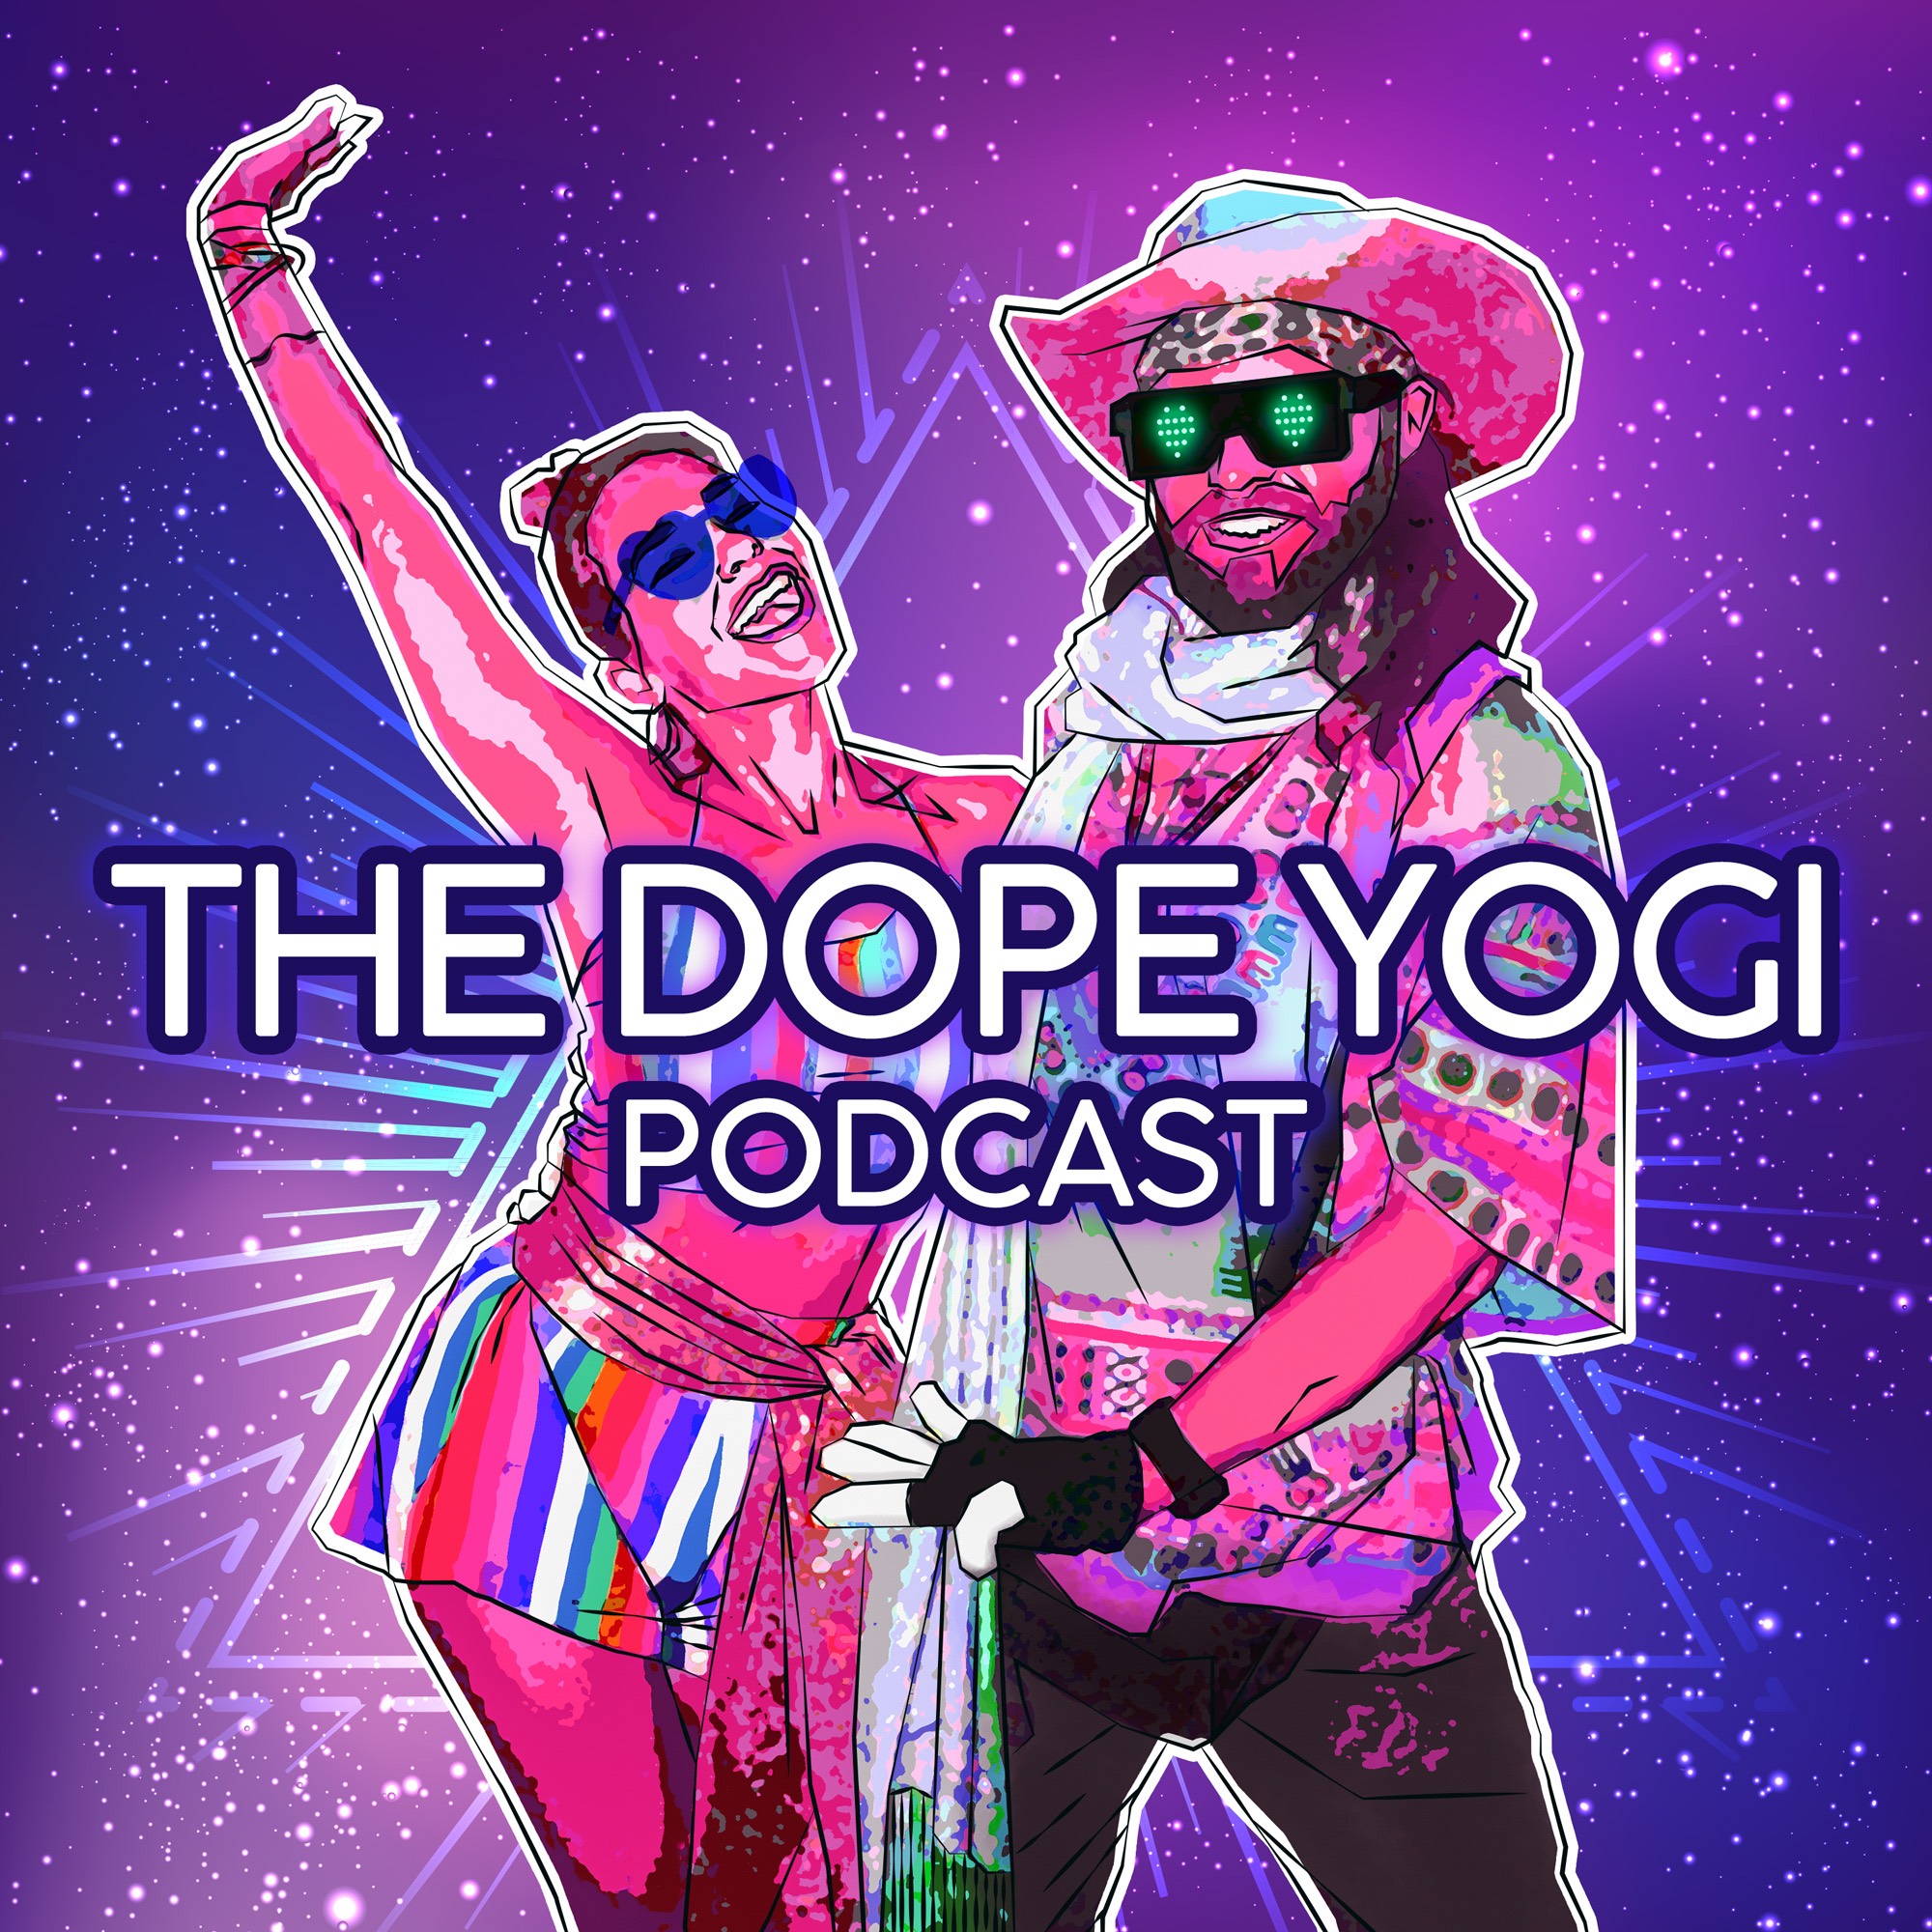 The Dope Yogi Podcast